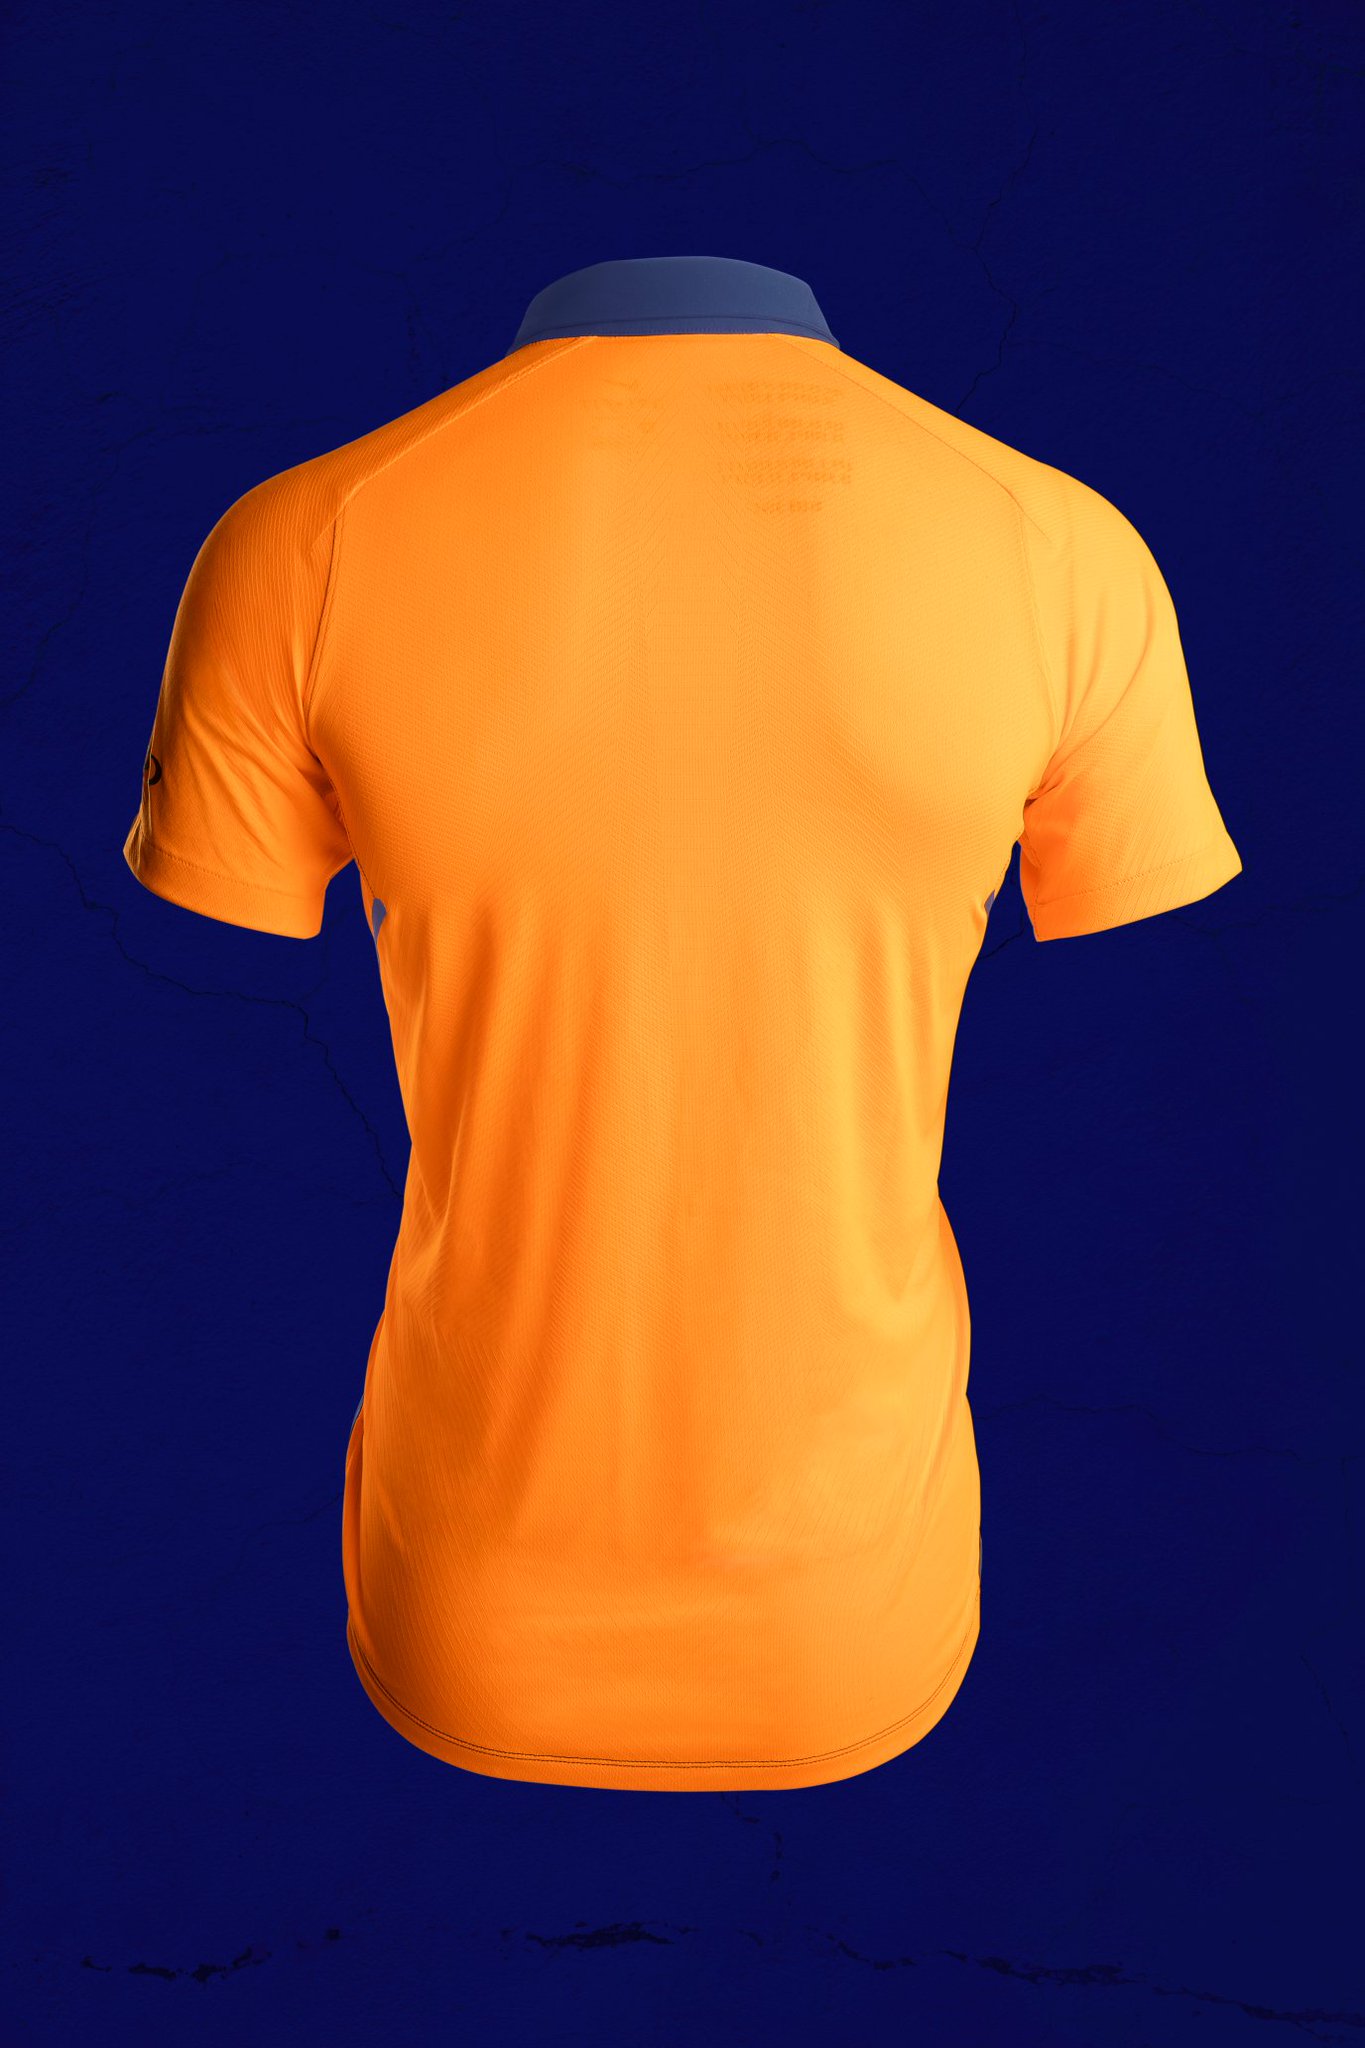 bcci jersey orange